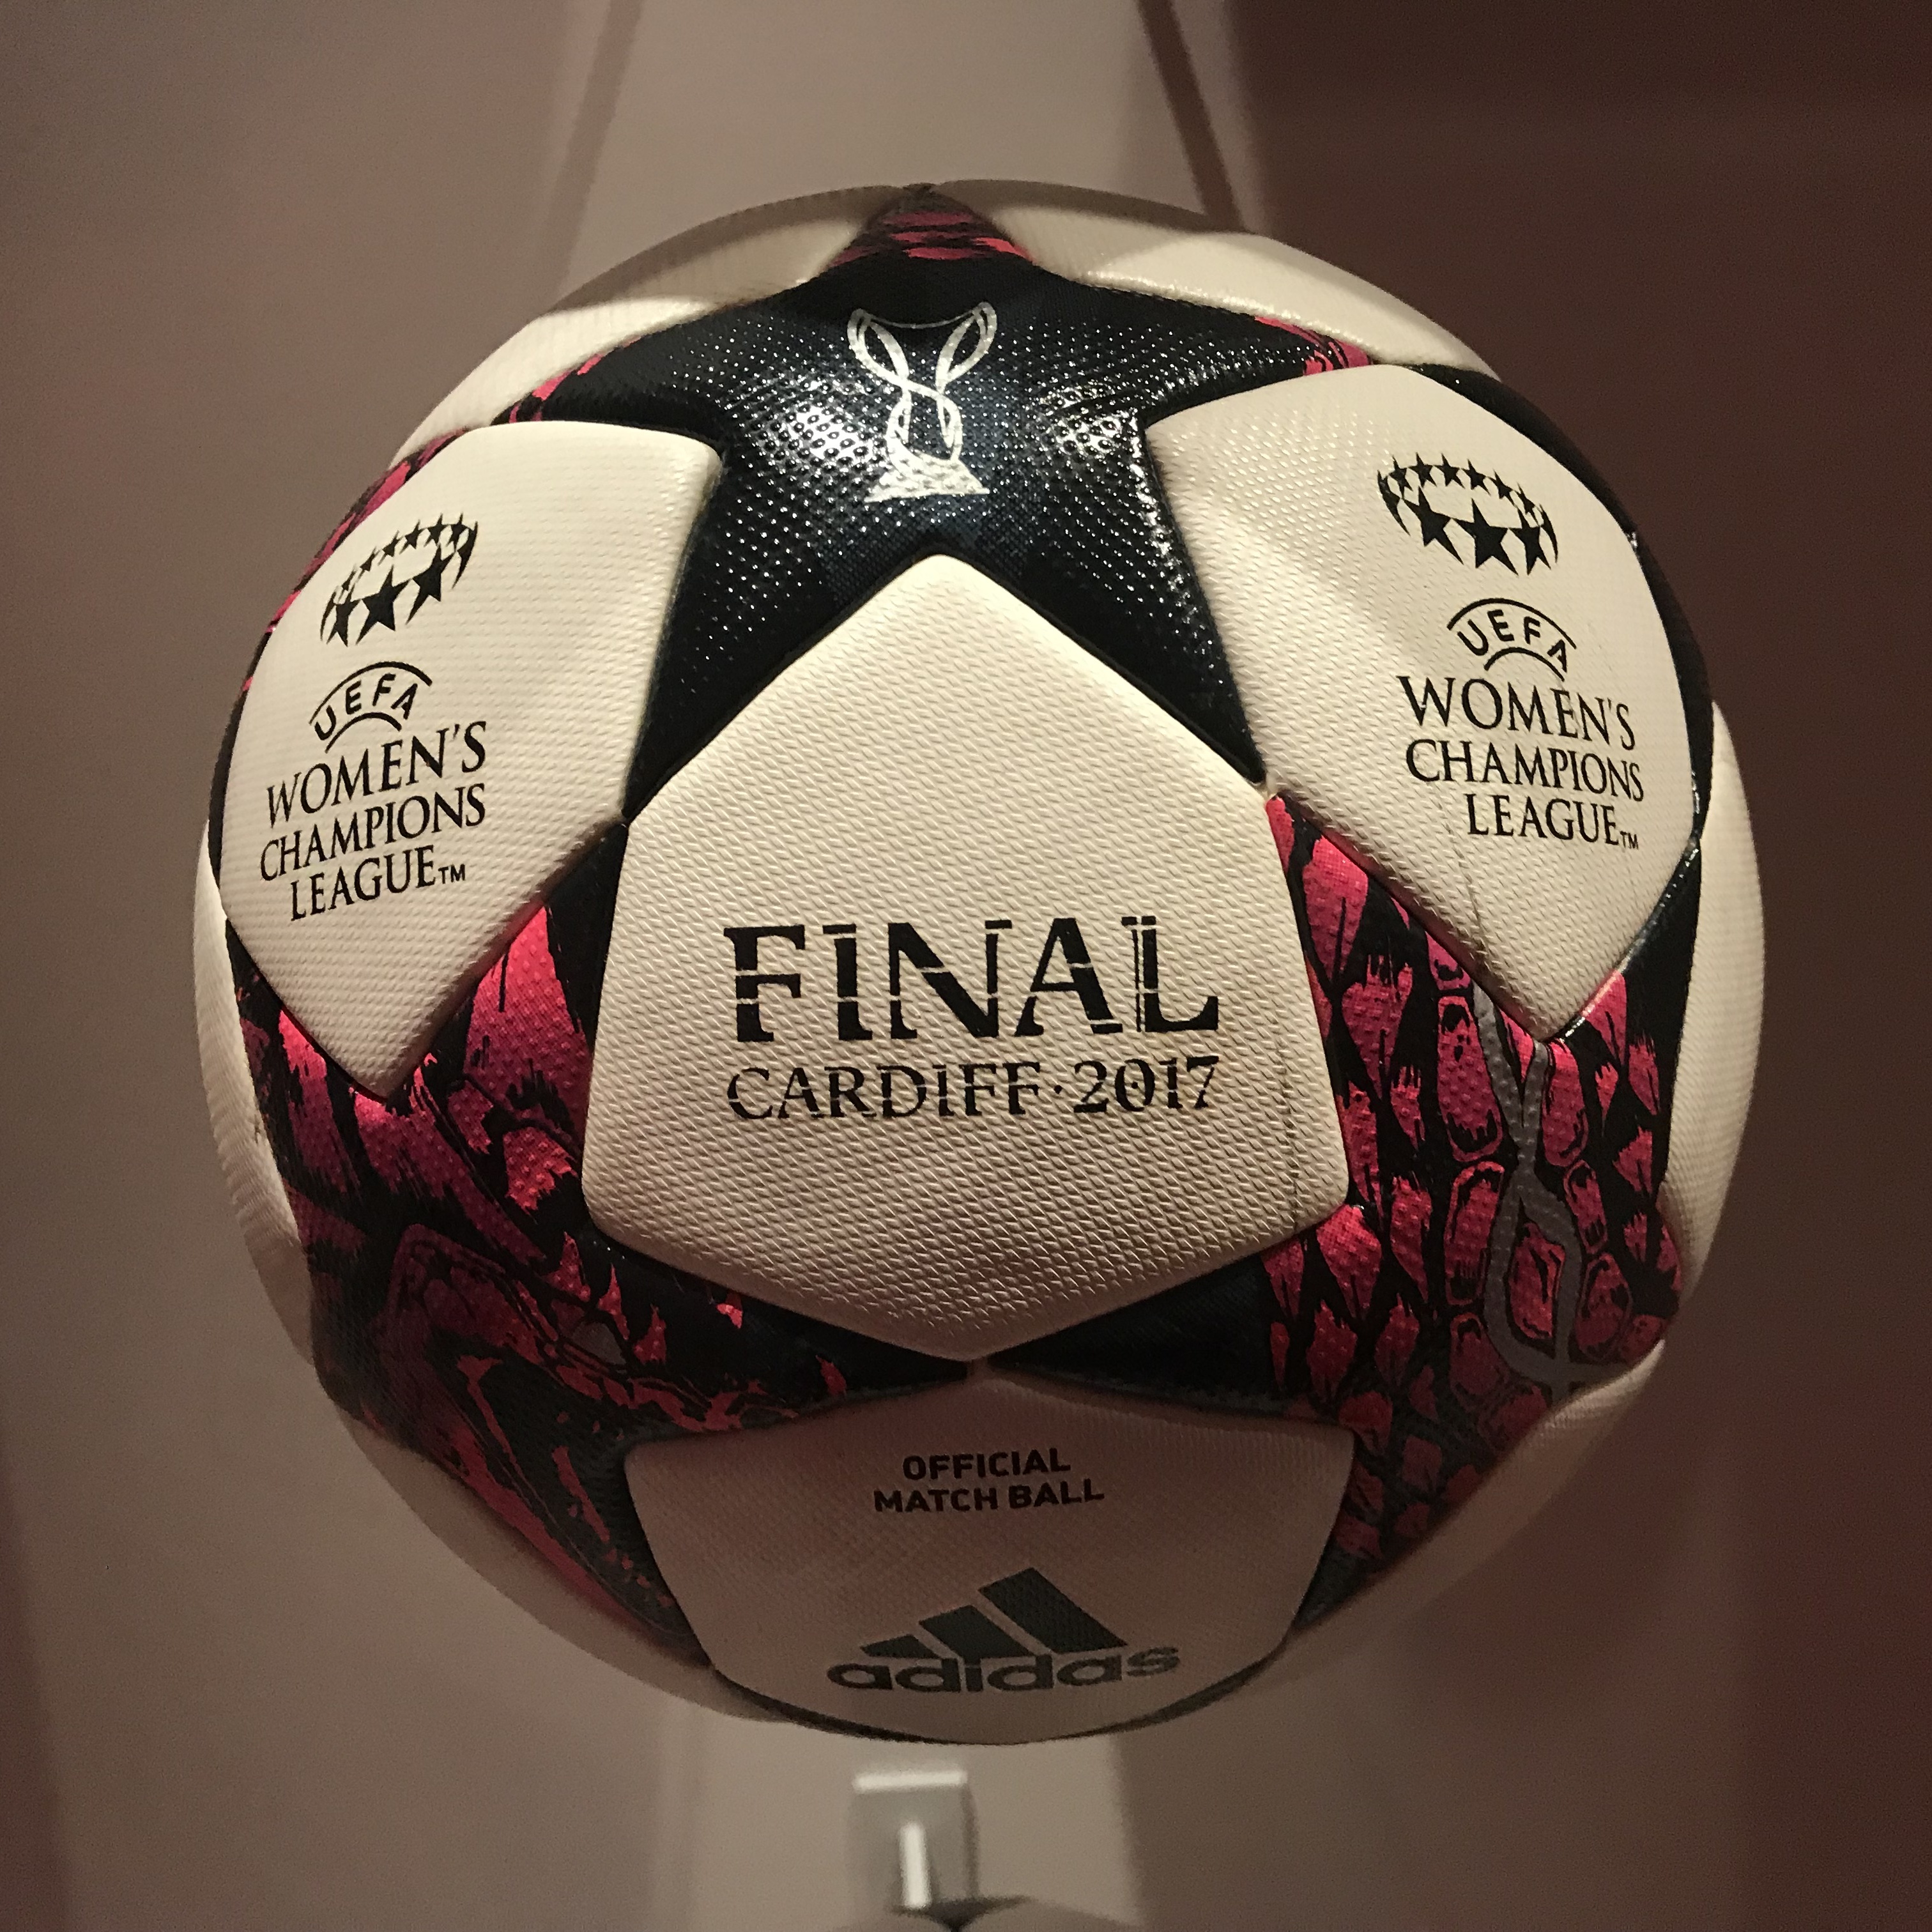 File:Ballon de la finale de la Champions League féminine 2017 (cropped).JPG  - Wikimedia Commons